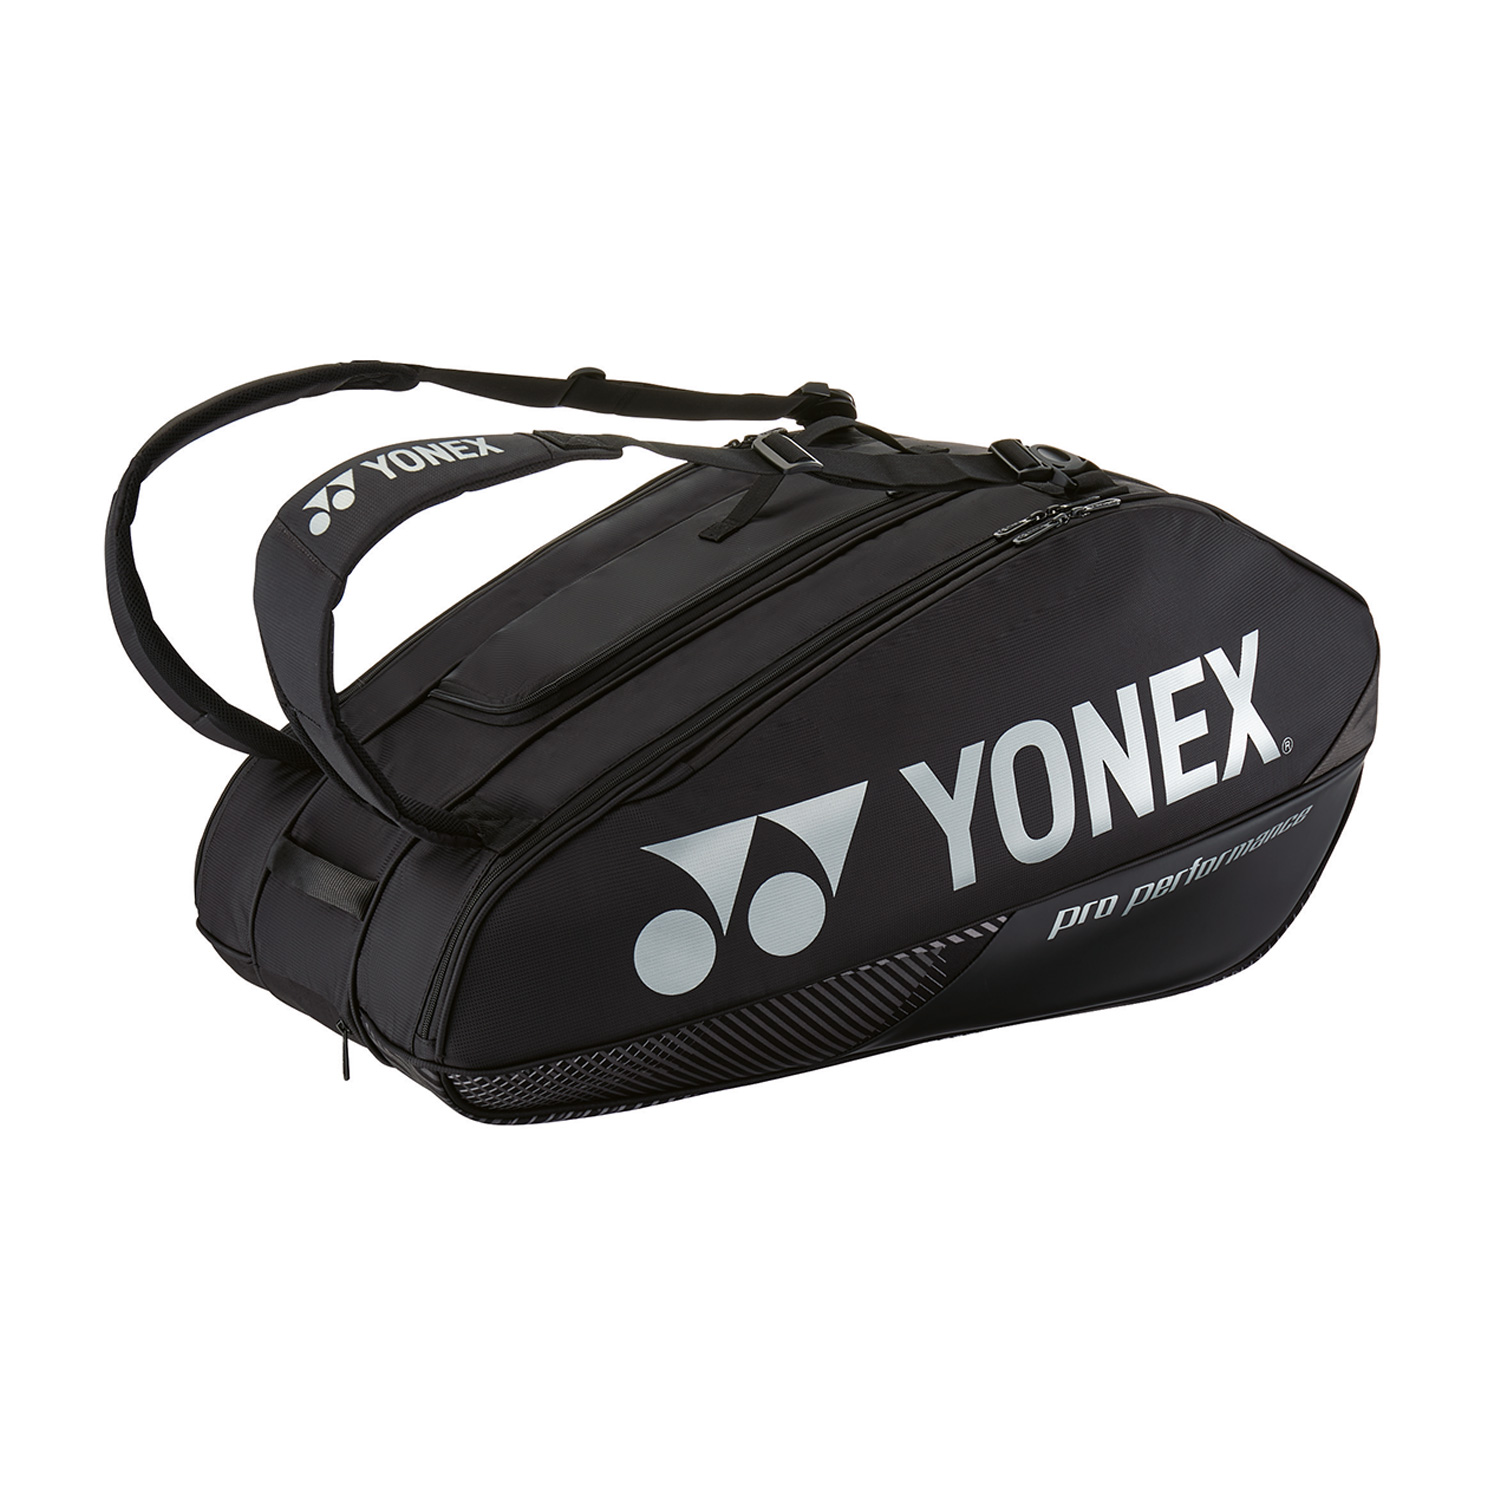 Yonex Bag Pro x 9 Bolsas - Black